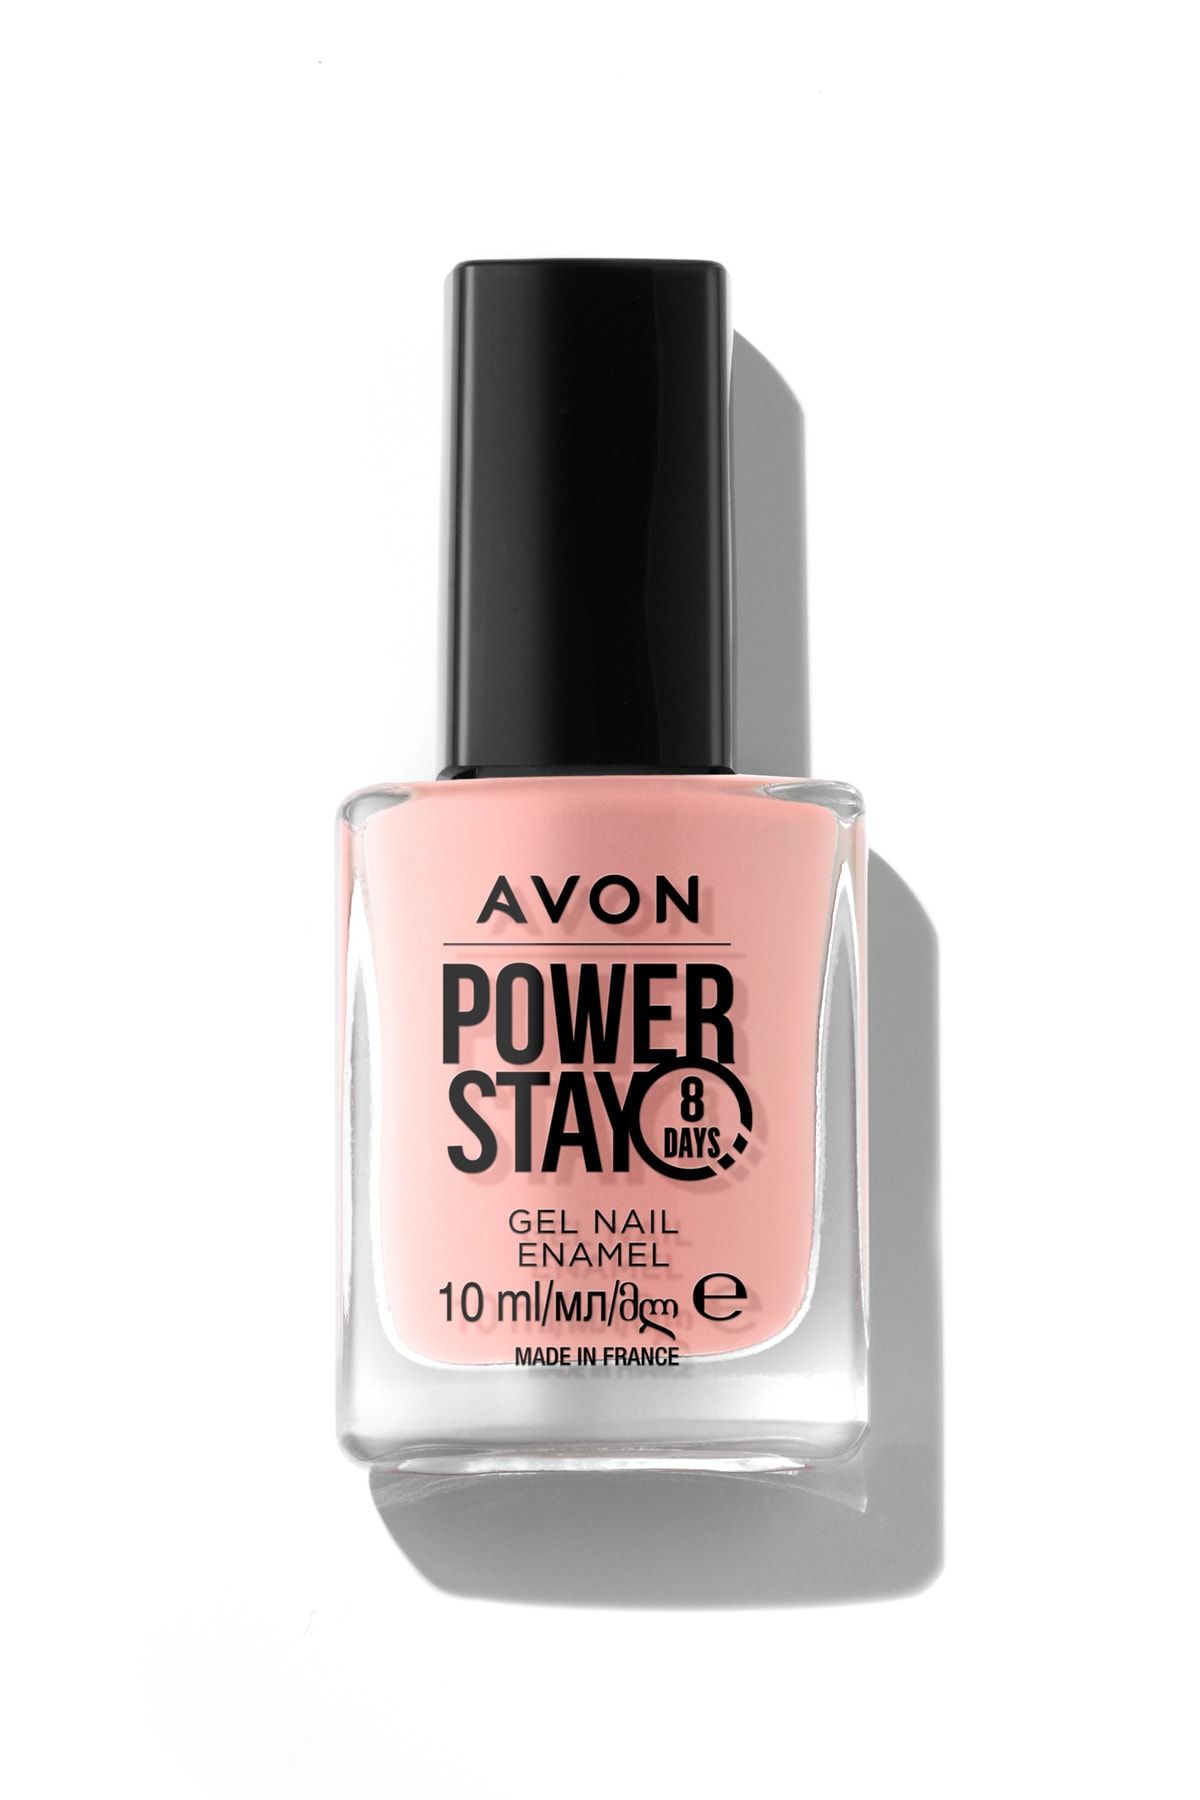 Avon Power Stay Jel Oje 10Ml Nude Silhouette